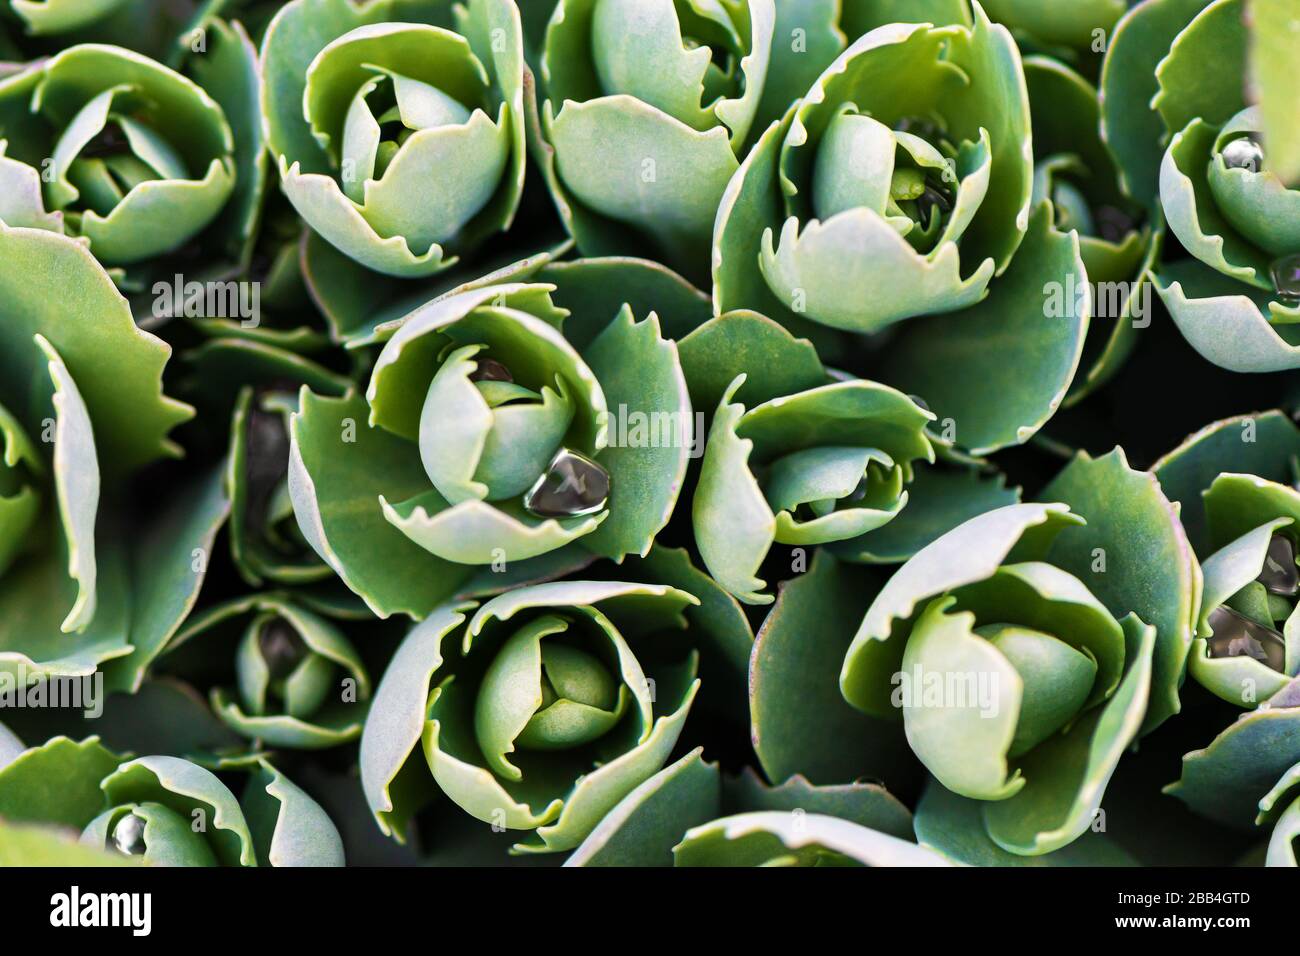 Green echeveria bush, close up Stock Photo